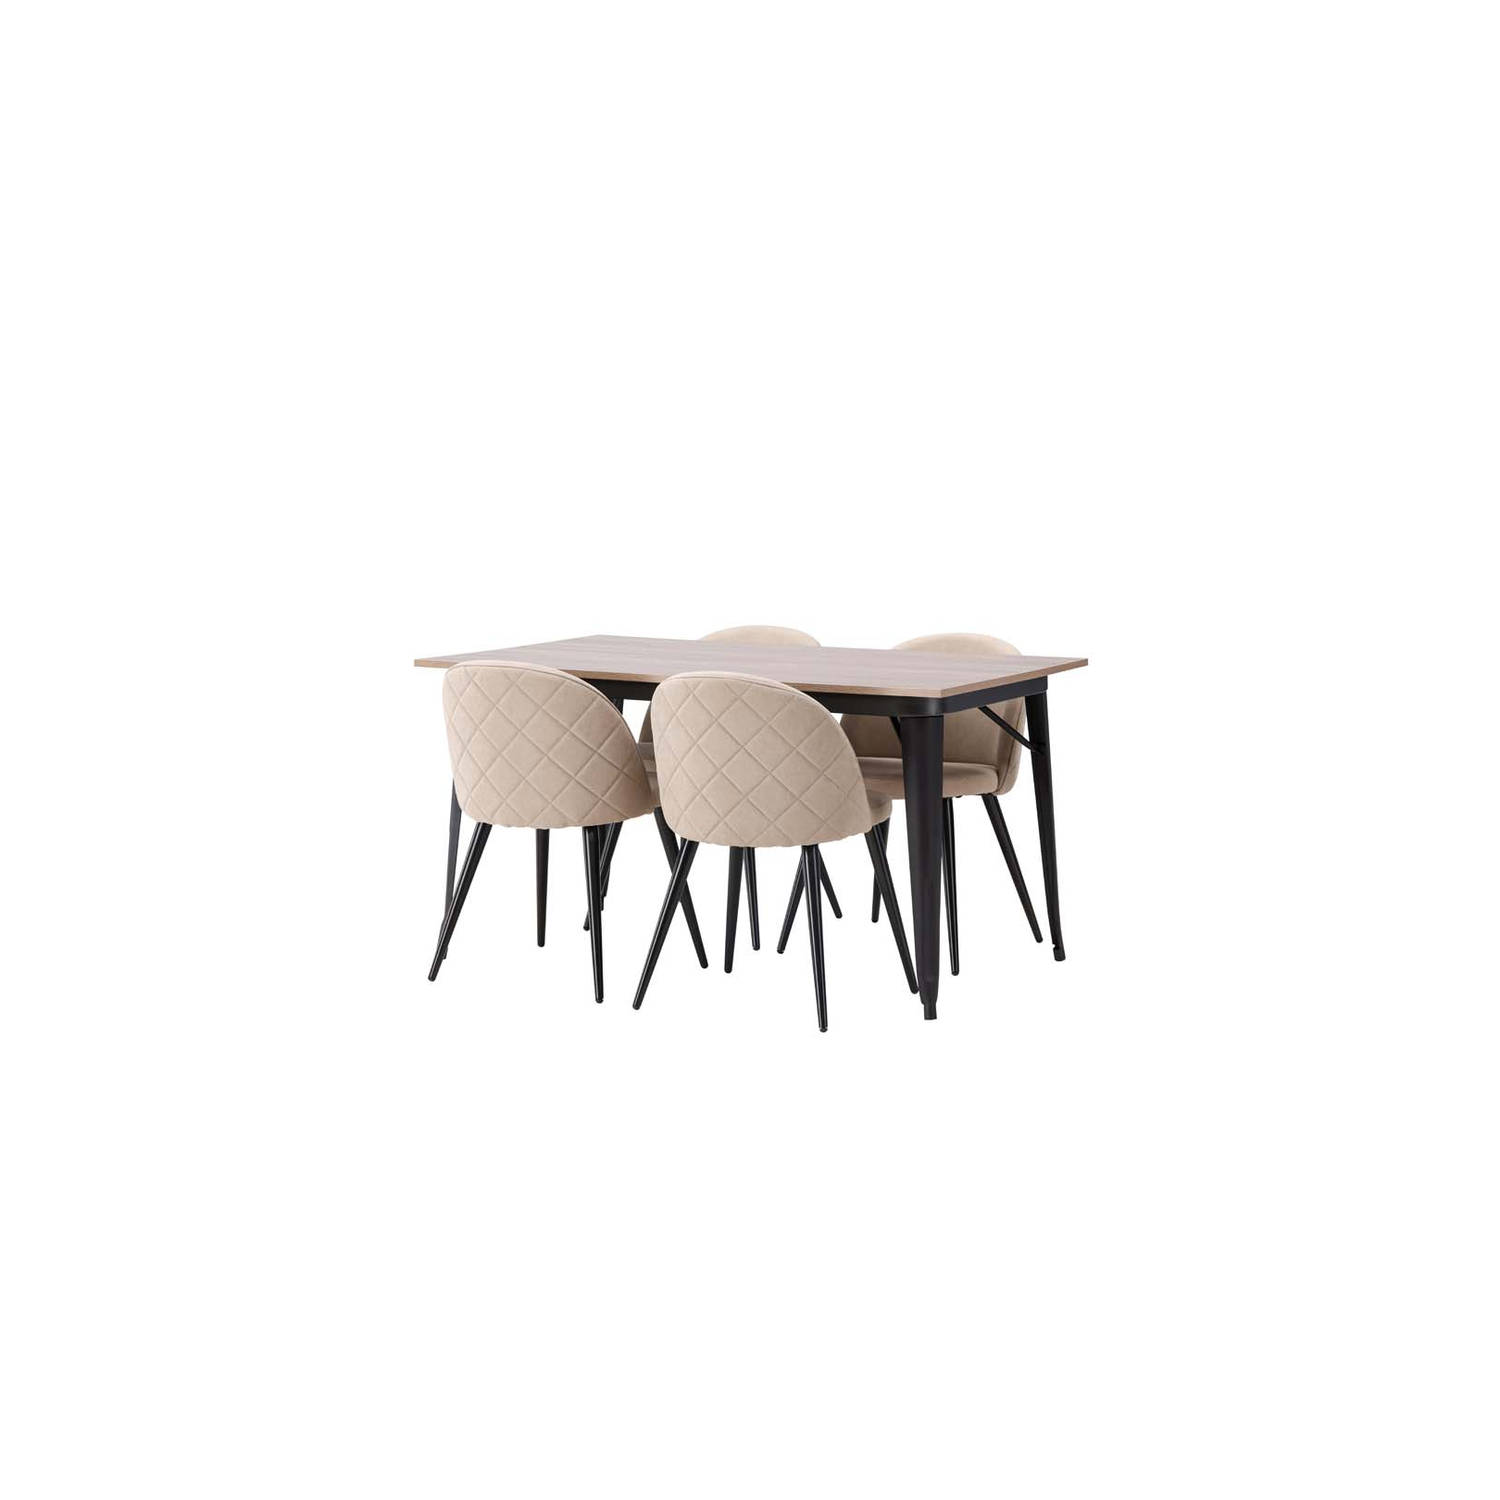 Tempe eethoek tafel okkernoot decor en 4 Velvet stoelen beige.